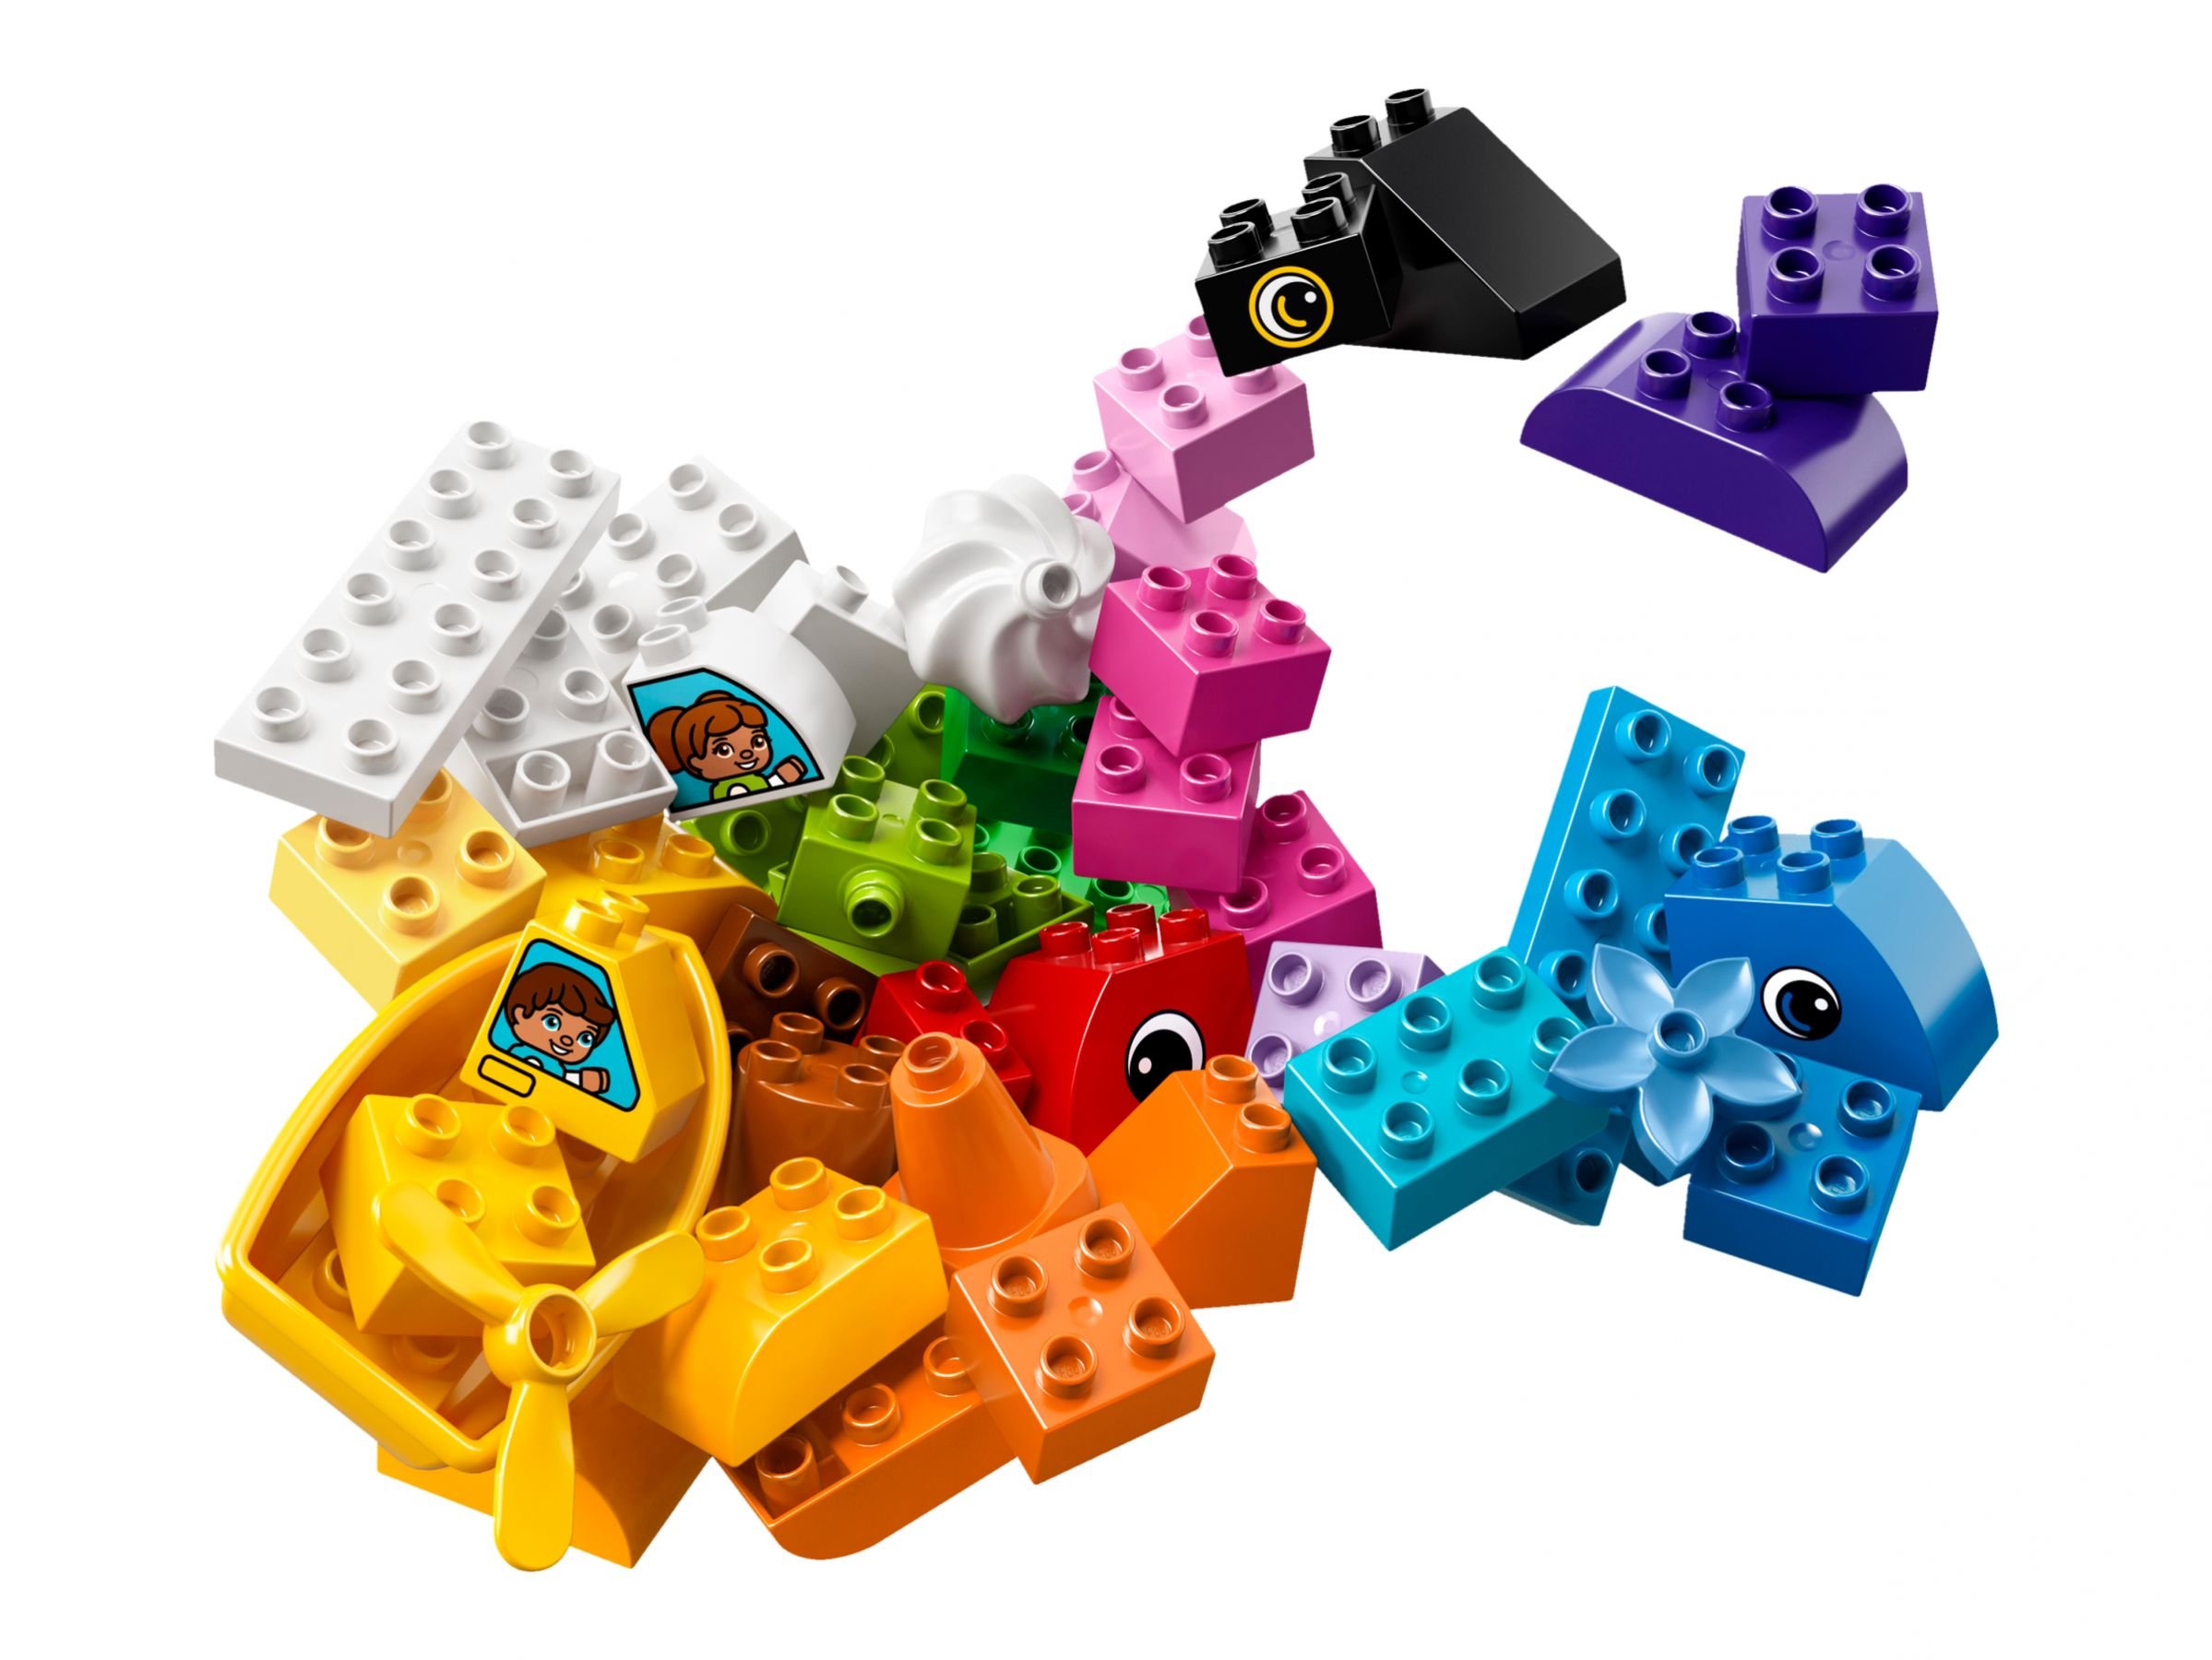 LEGO Duplo 10865 Witzige Modelle LEGO_10865_alt3.jpg